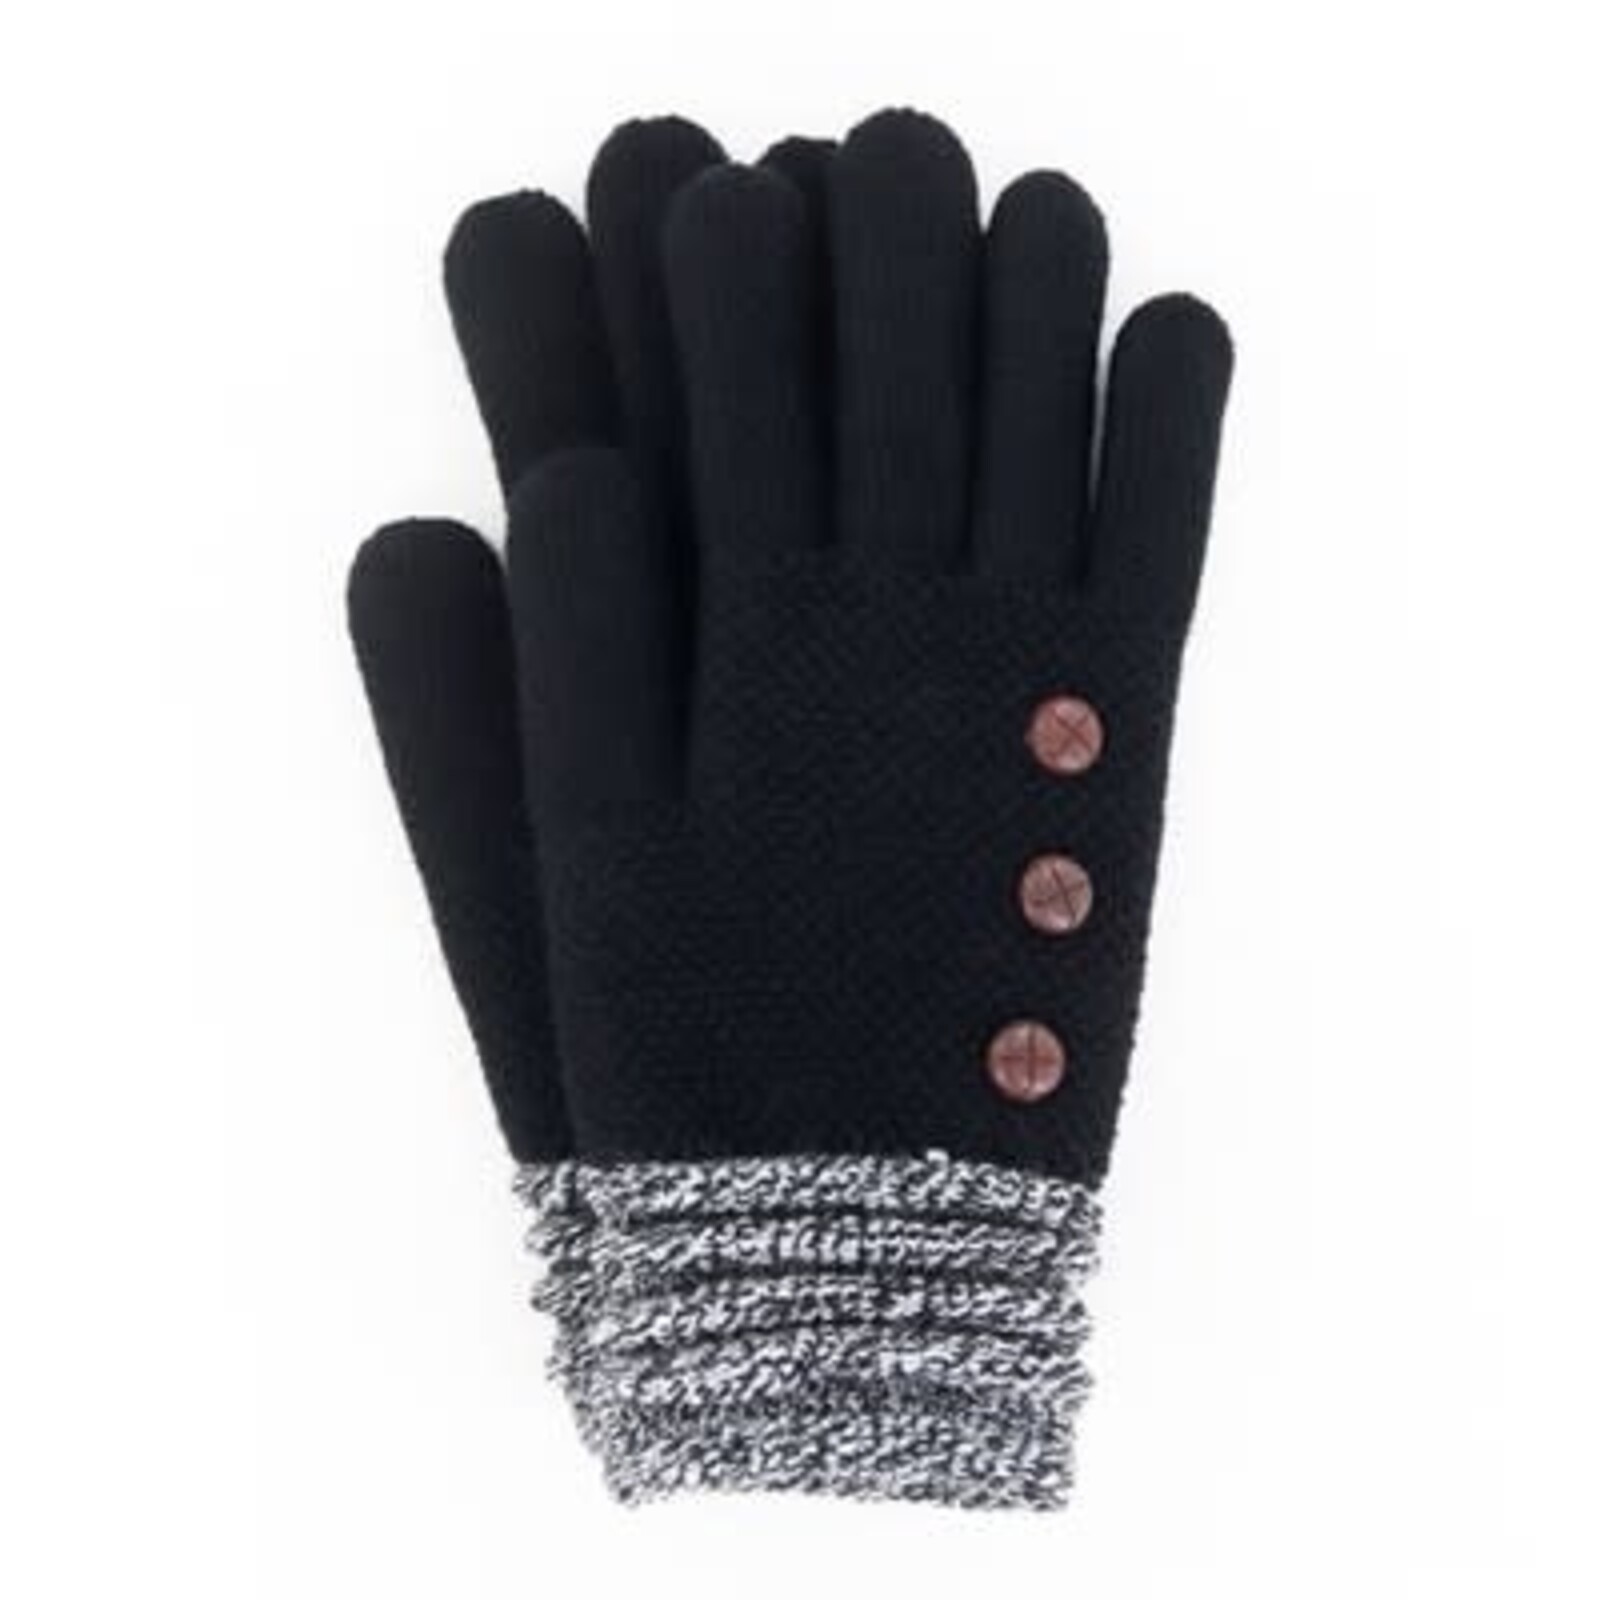 Britt's Knit's Britt's Knit Cuffed Gloves  BKGLV2 loading=